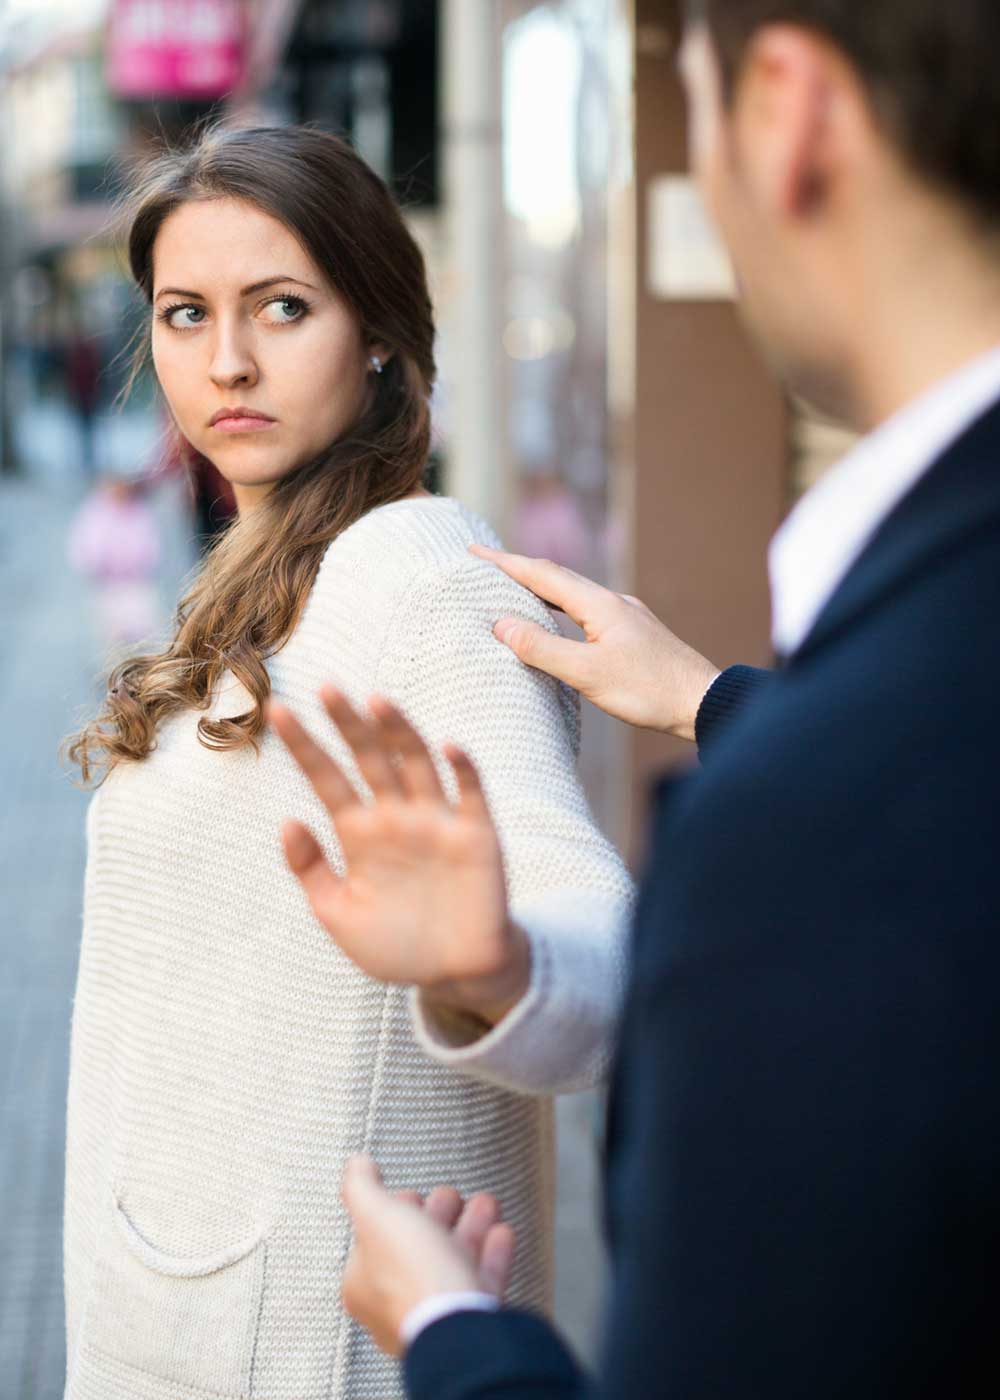 Woman saying no to man's advance